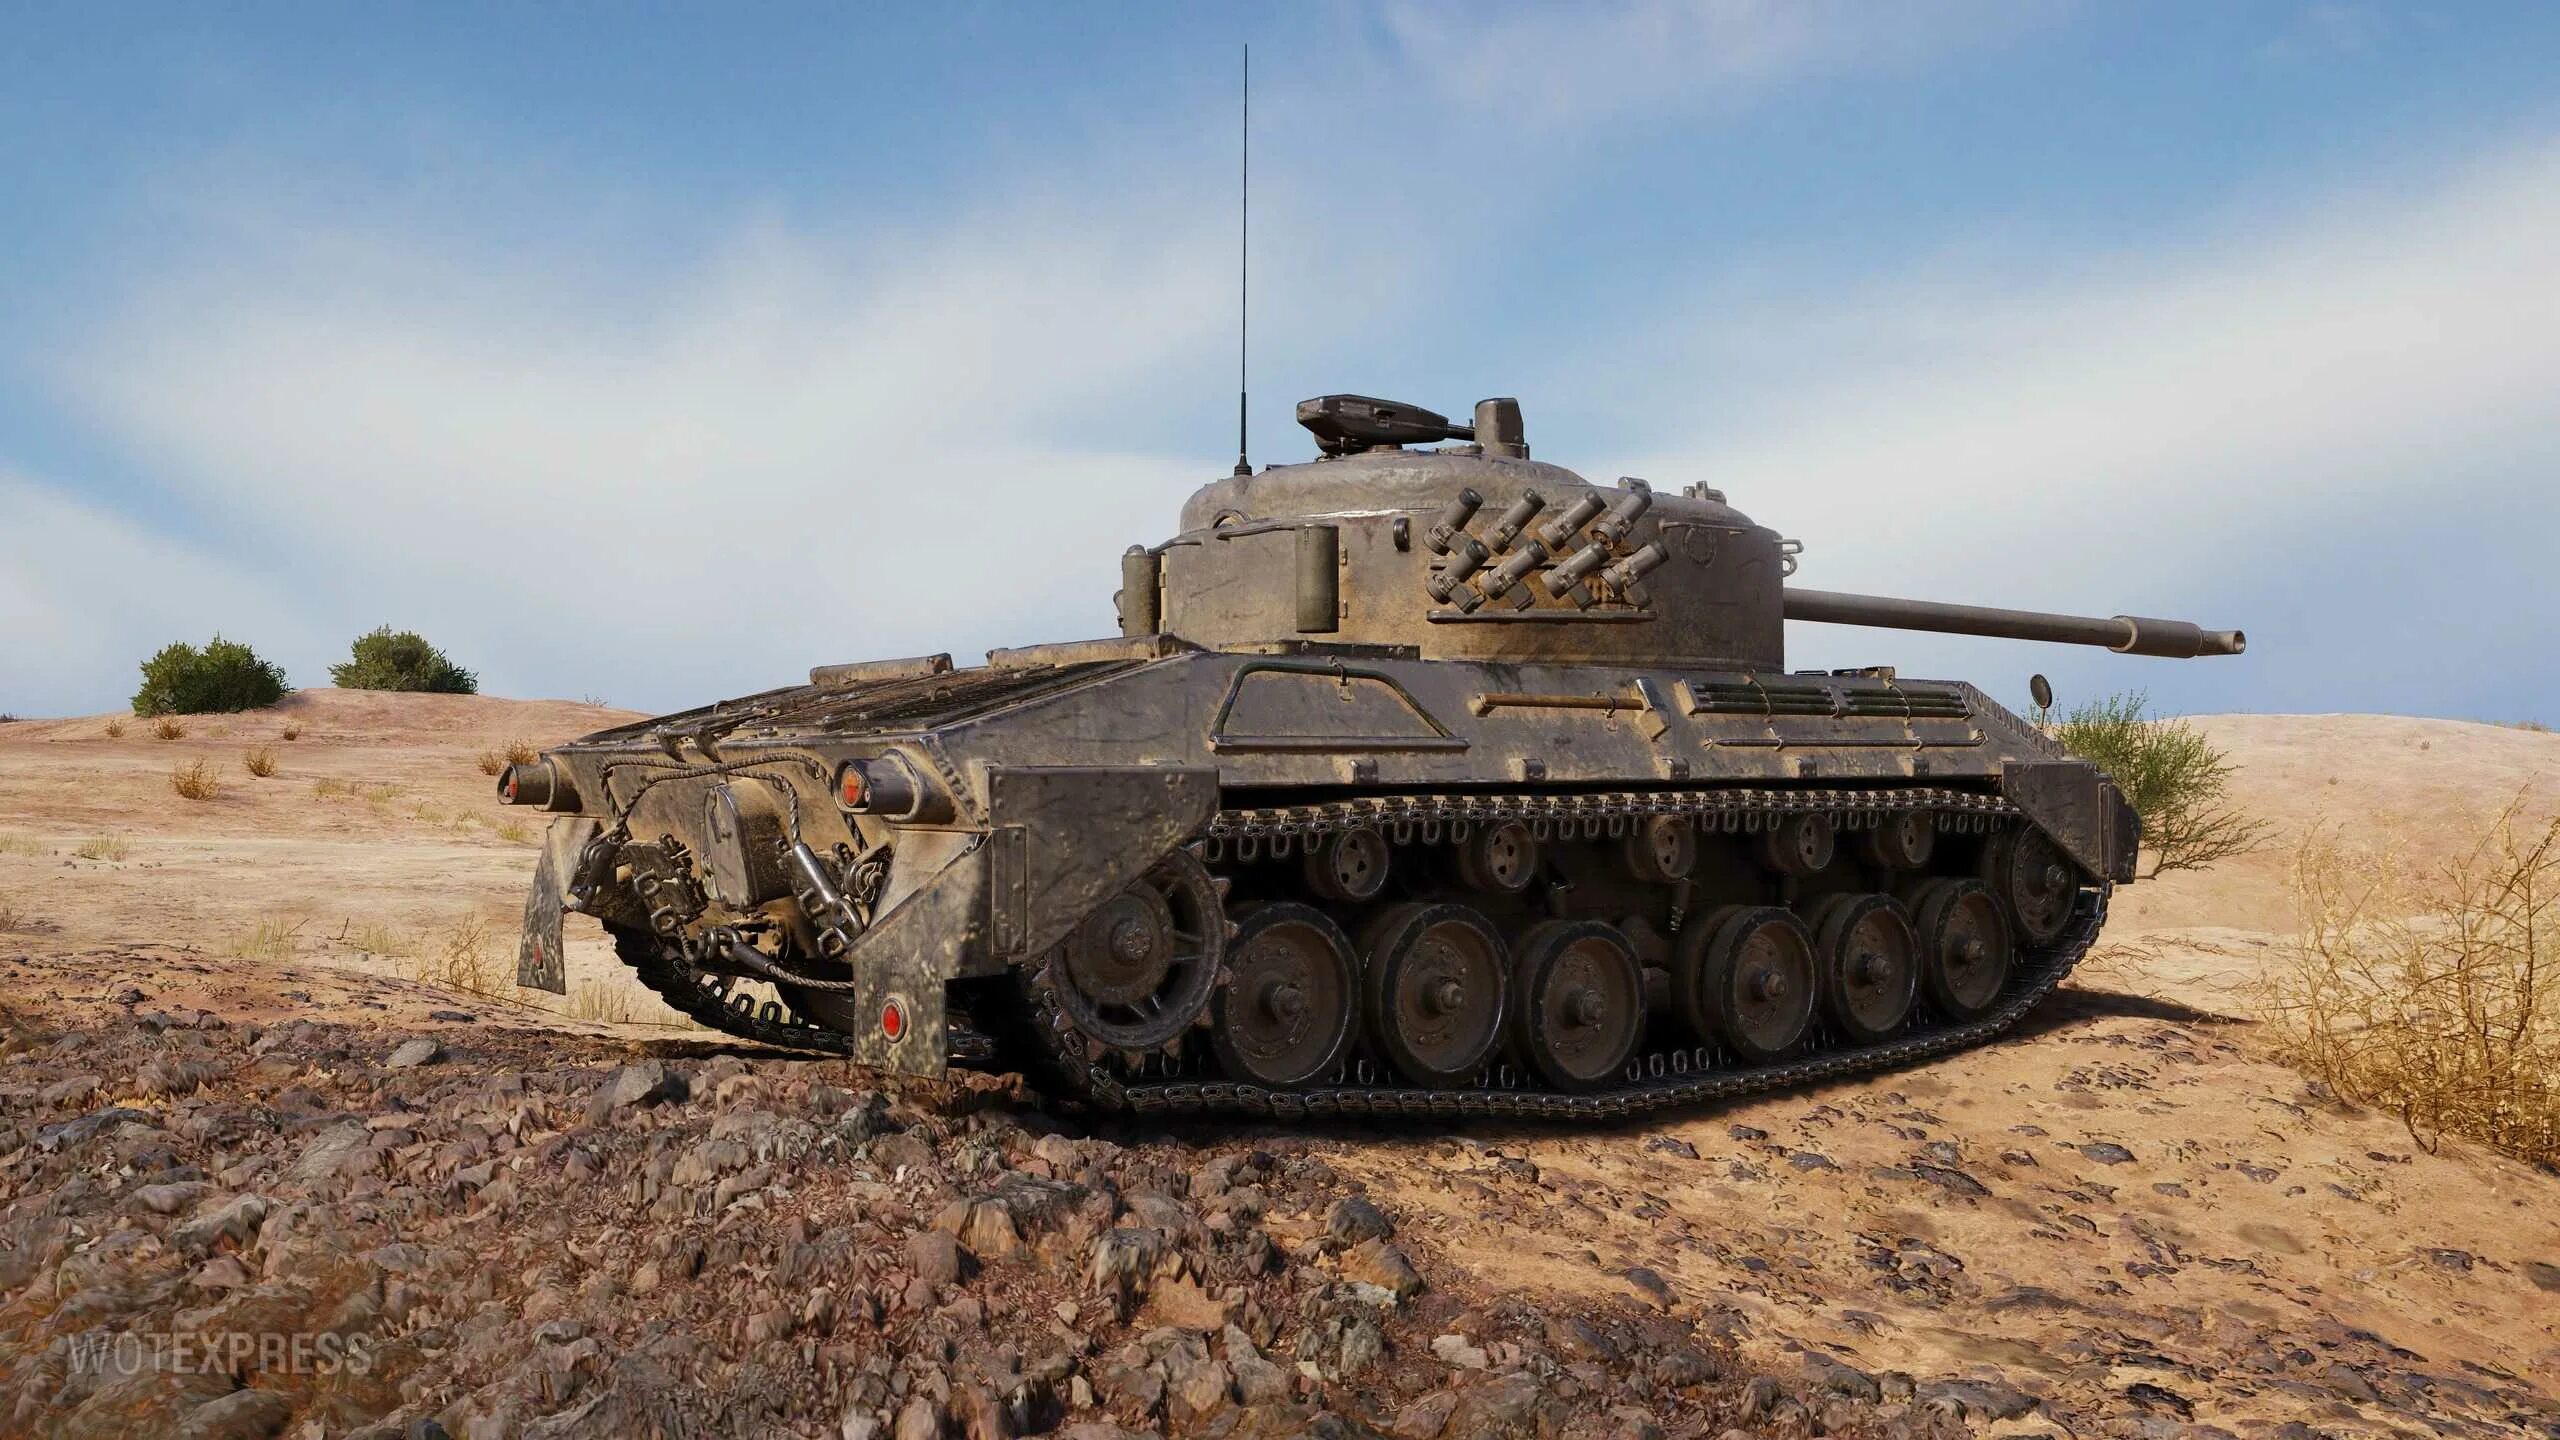 Немецкий танк 7. KPZ 07 rh. Kampfpanzer 07 rh танк. Танк KPZ 07 rh. КПЗ 07 танк.